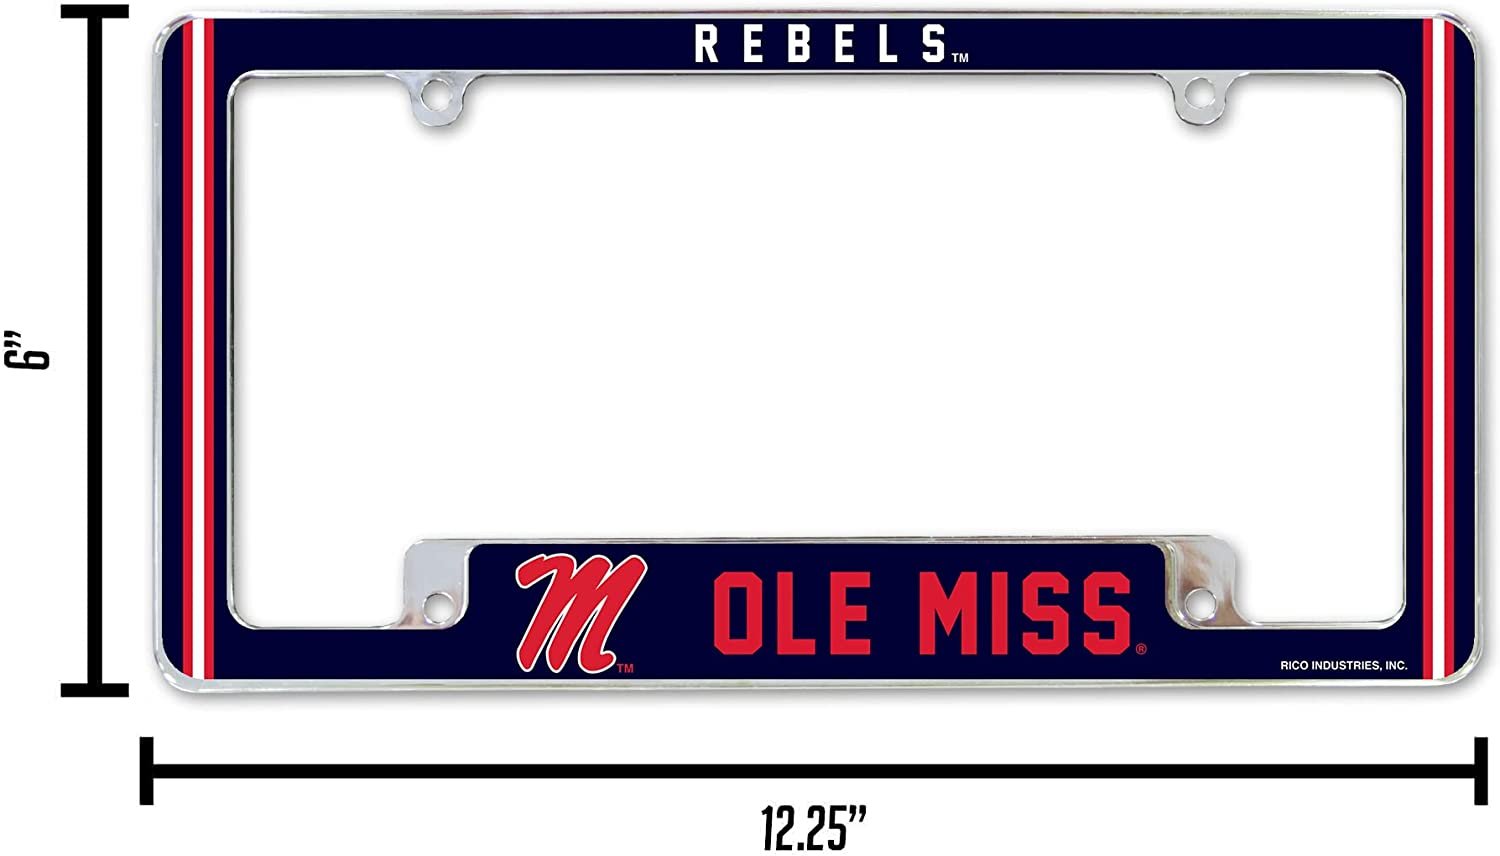 University of Mississippi Rebels Ole Miss Metal License Plate Frame Chrome Tag Cover Alternate Design 6x12 Inch